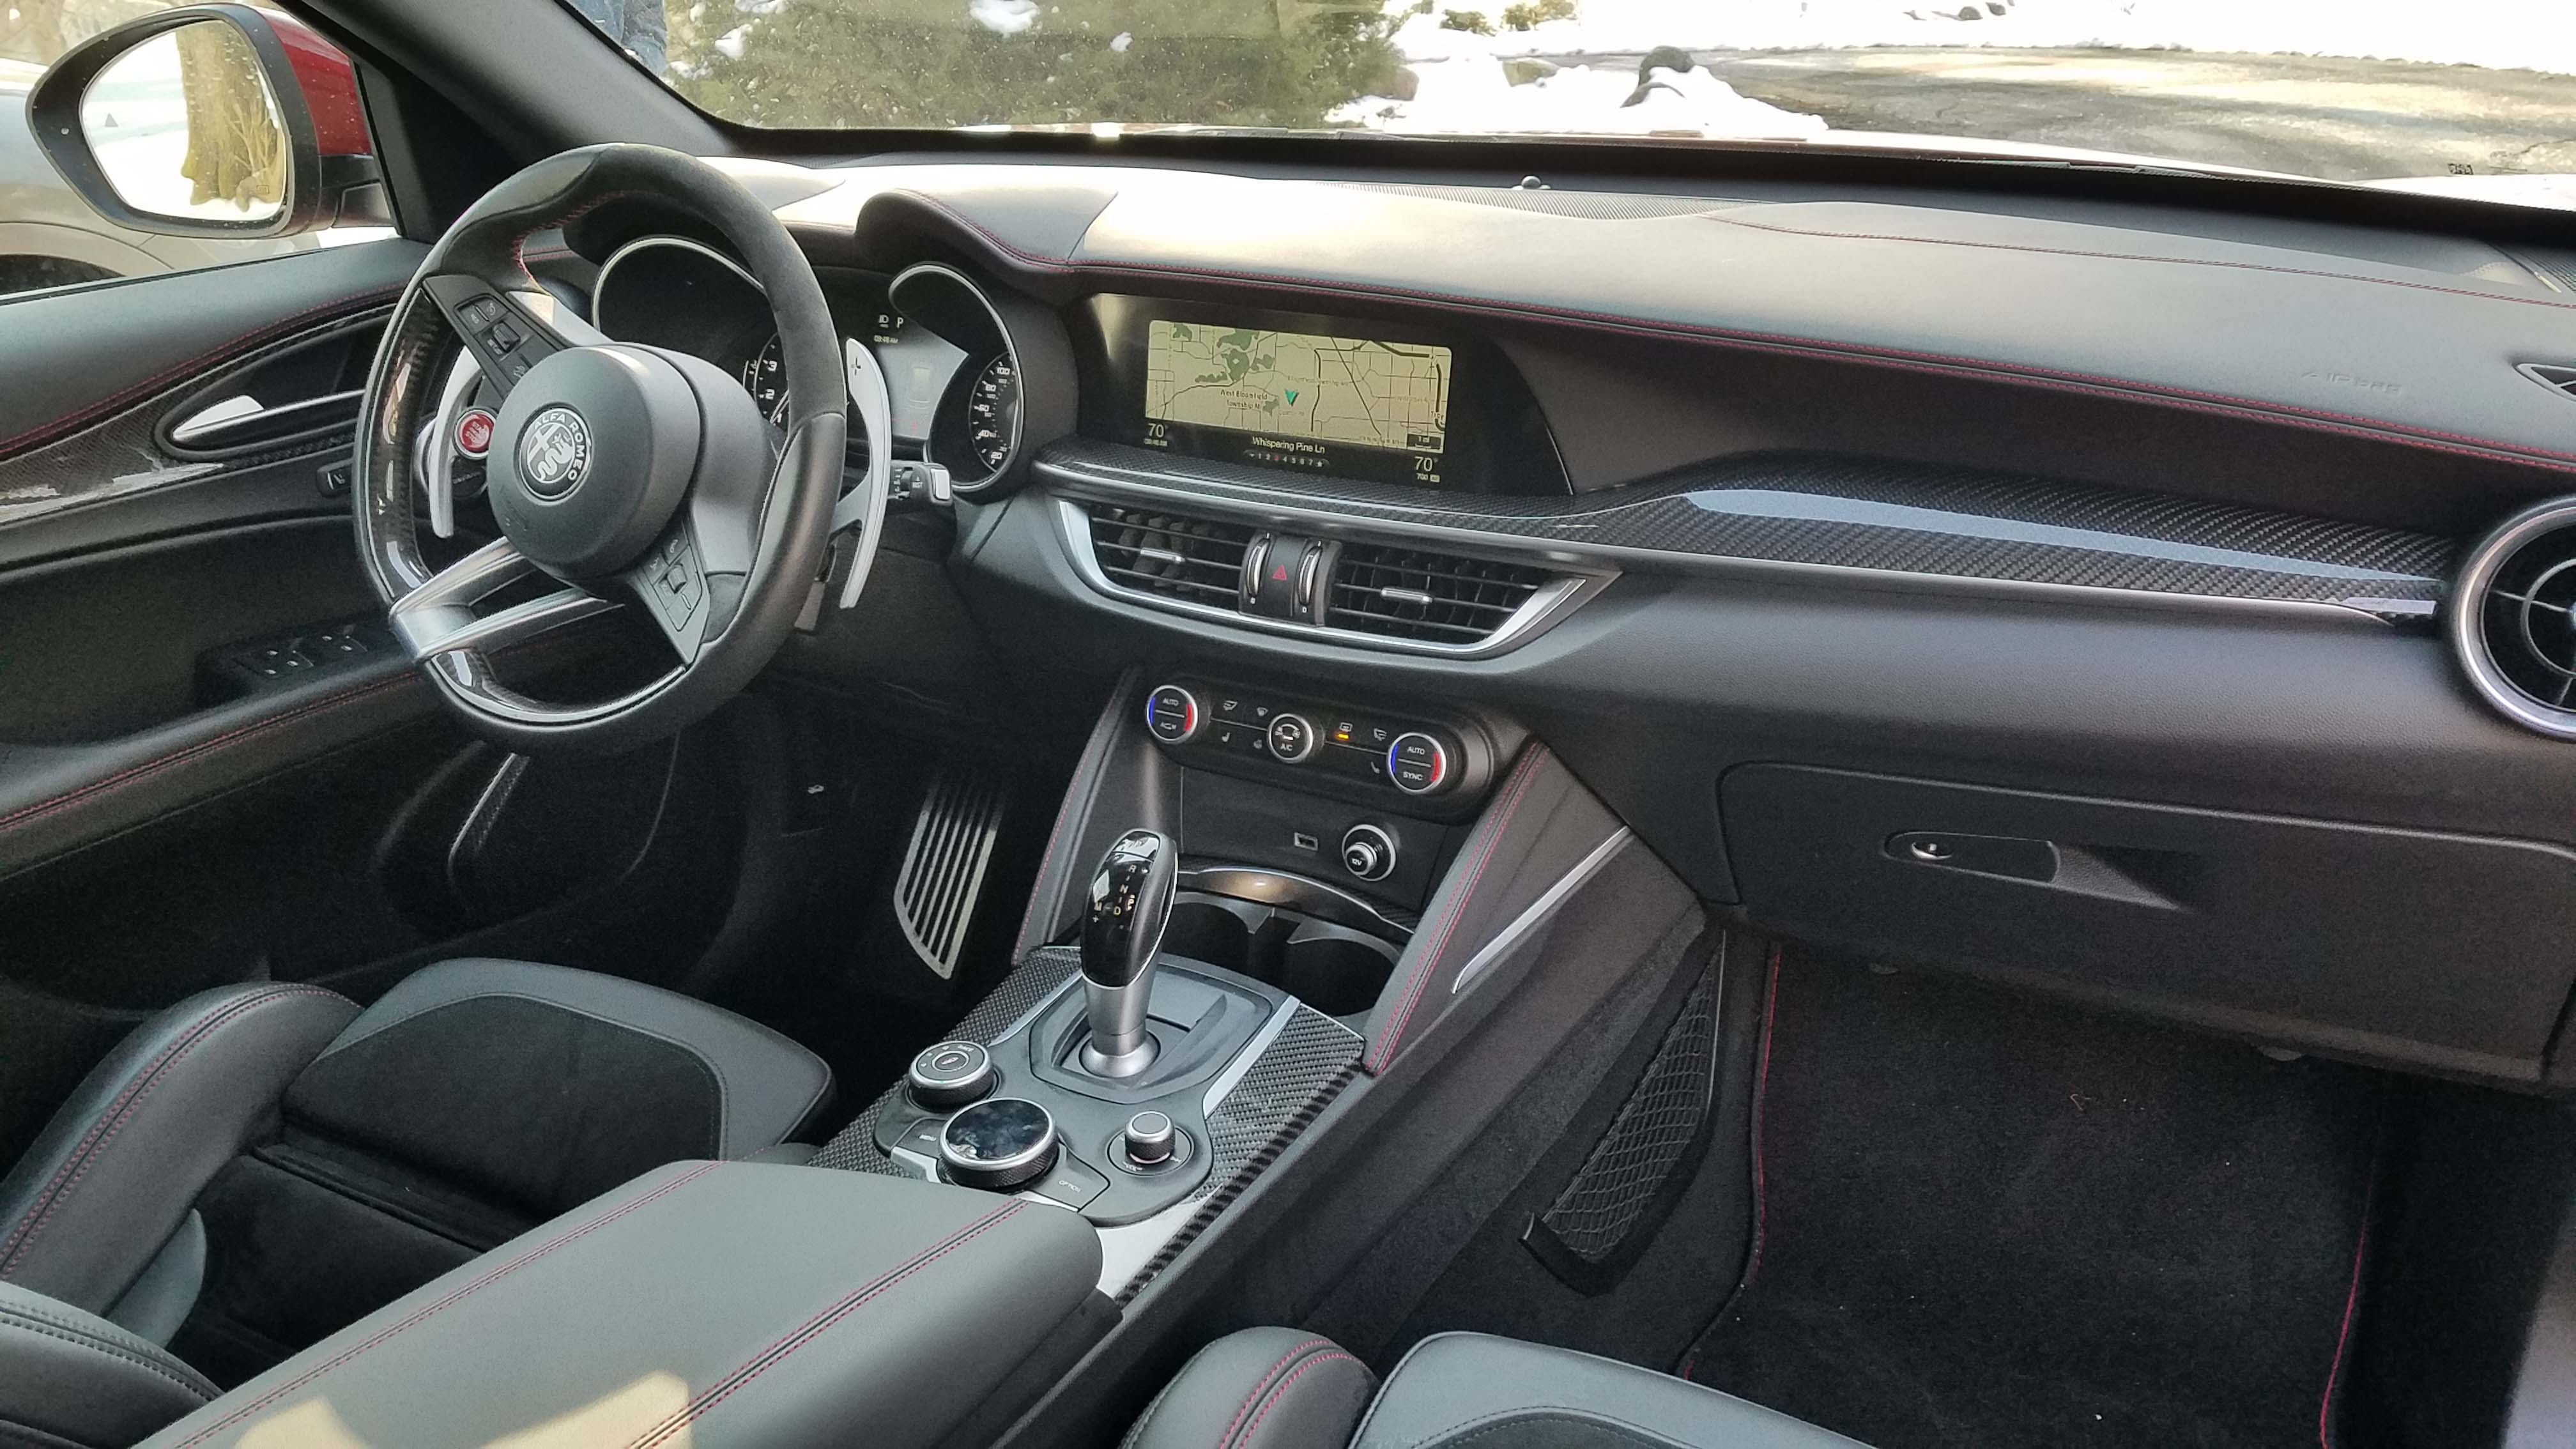 The Alfa Romeo Stelvio Quadrifoglio has a unique interior with remote-rotary controlled touchscreen and big analog gauges.